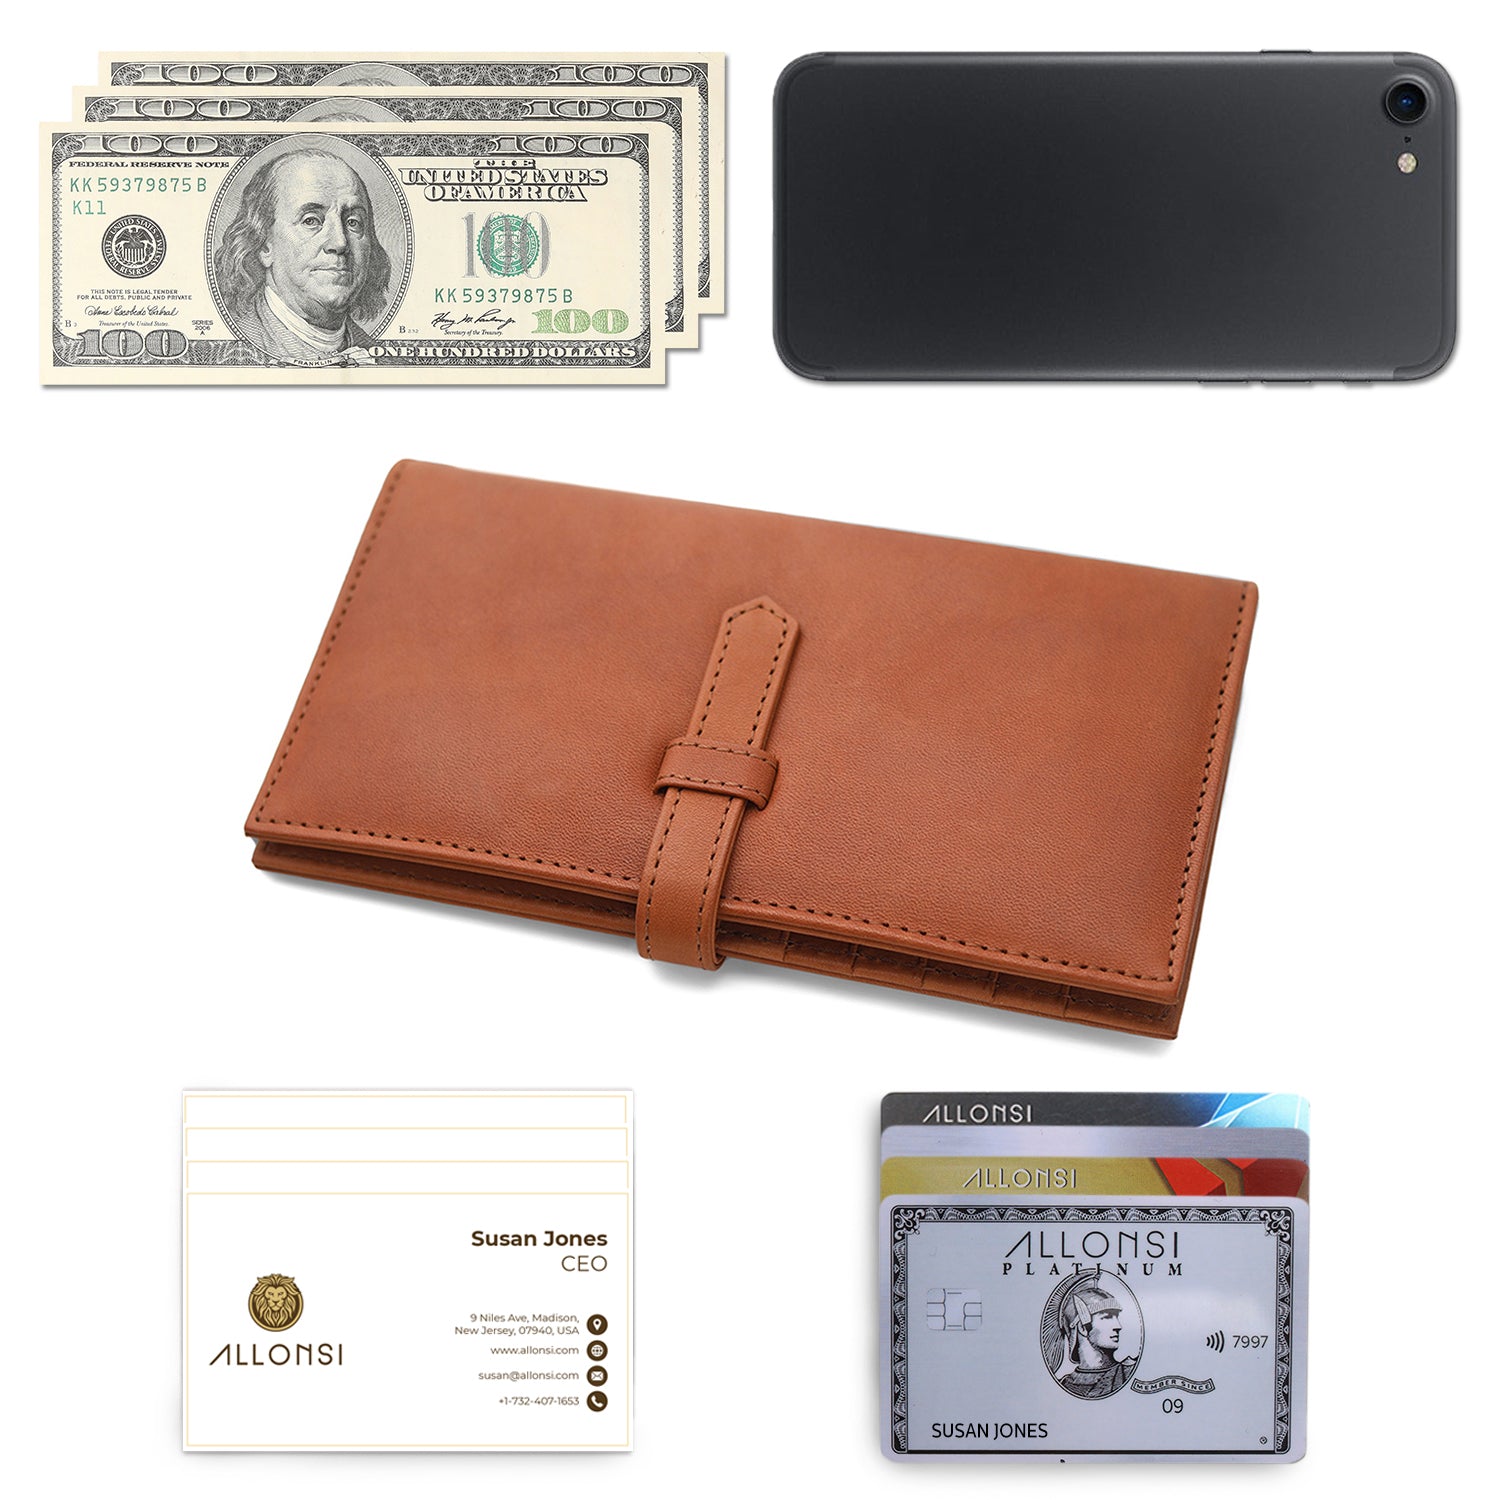 Safekeeper Women's Slim Card Wallet